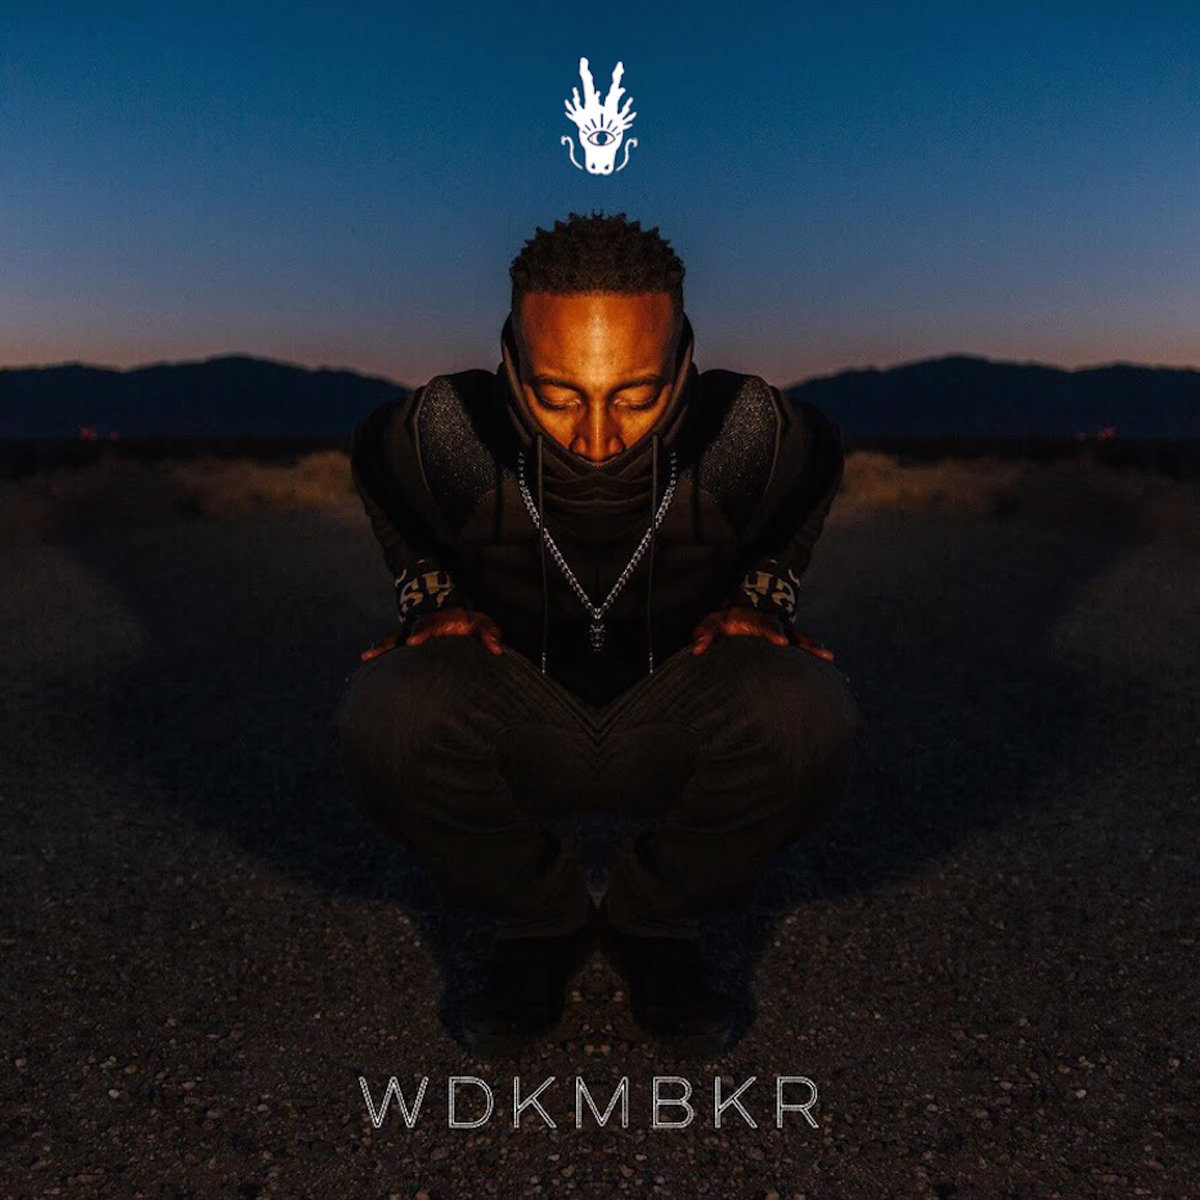 Sum Goes Hard In His New ‘WDKMBKR’ EP [STREAM]